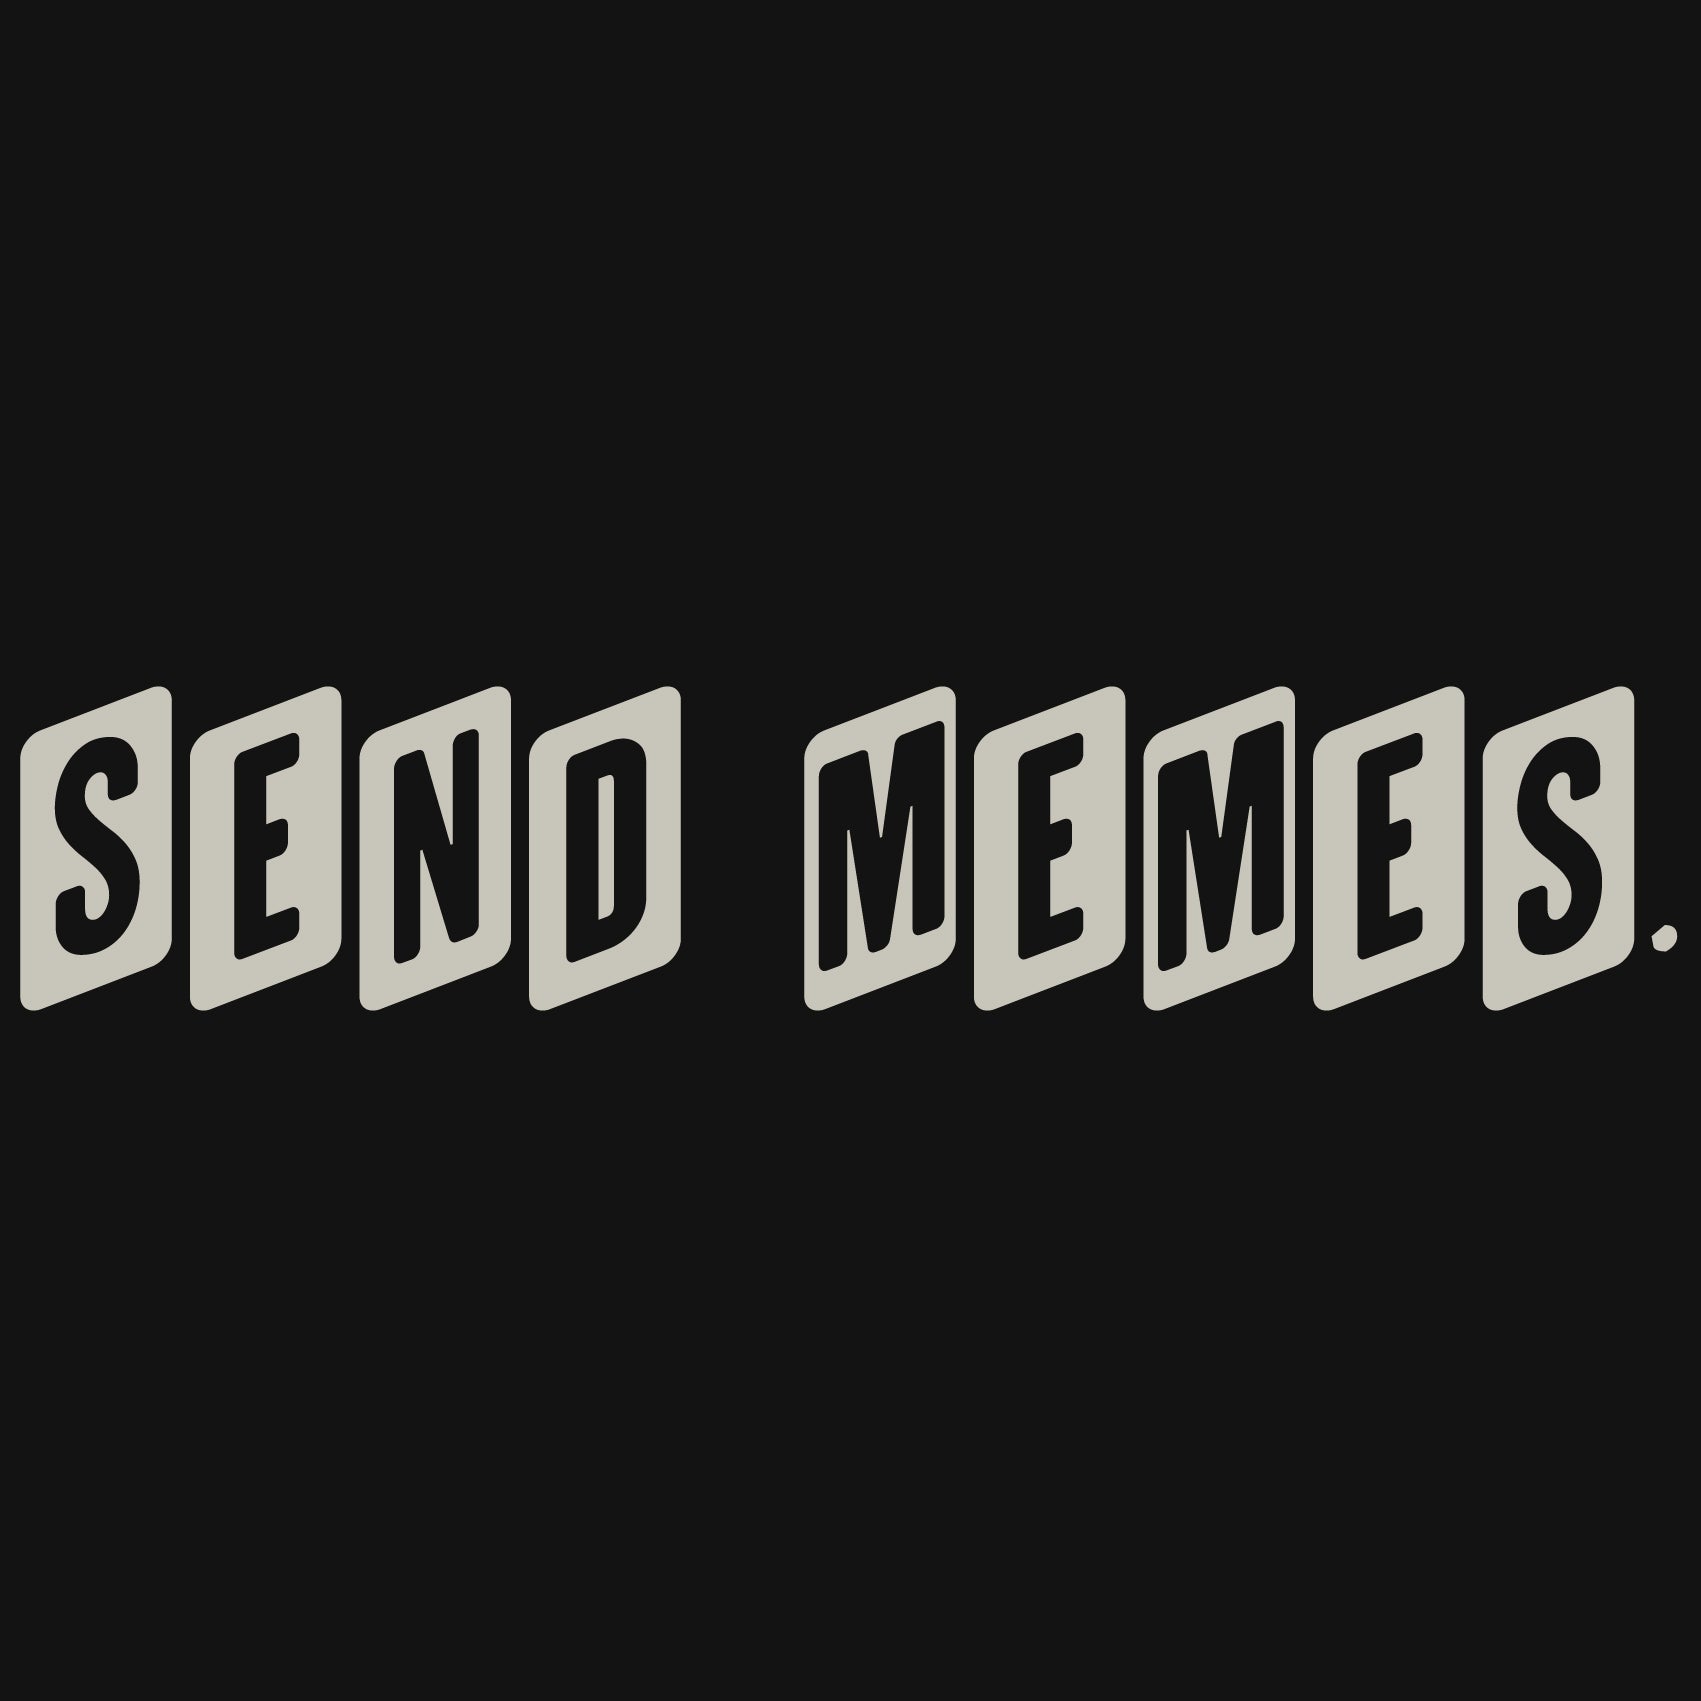 Send Memes Reactr Tshirts For Men - Eyewearlabs